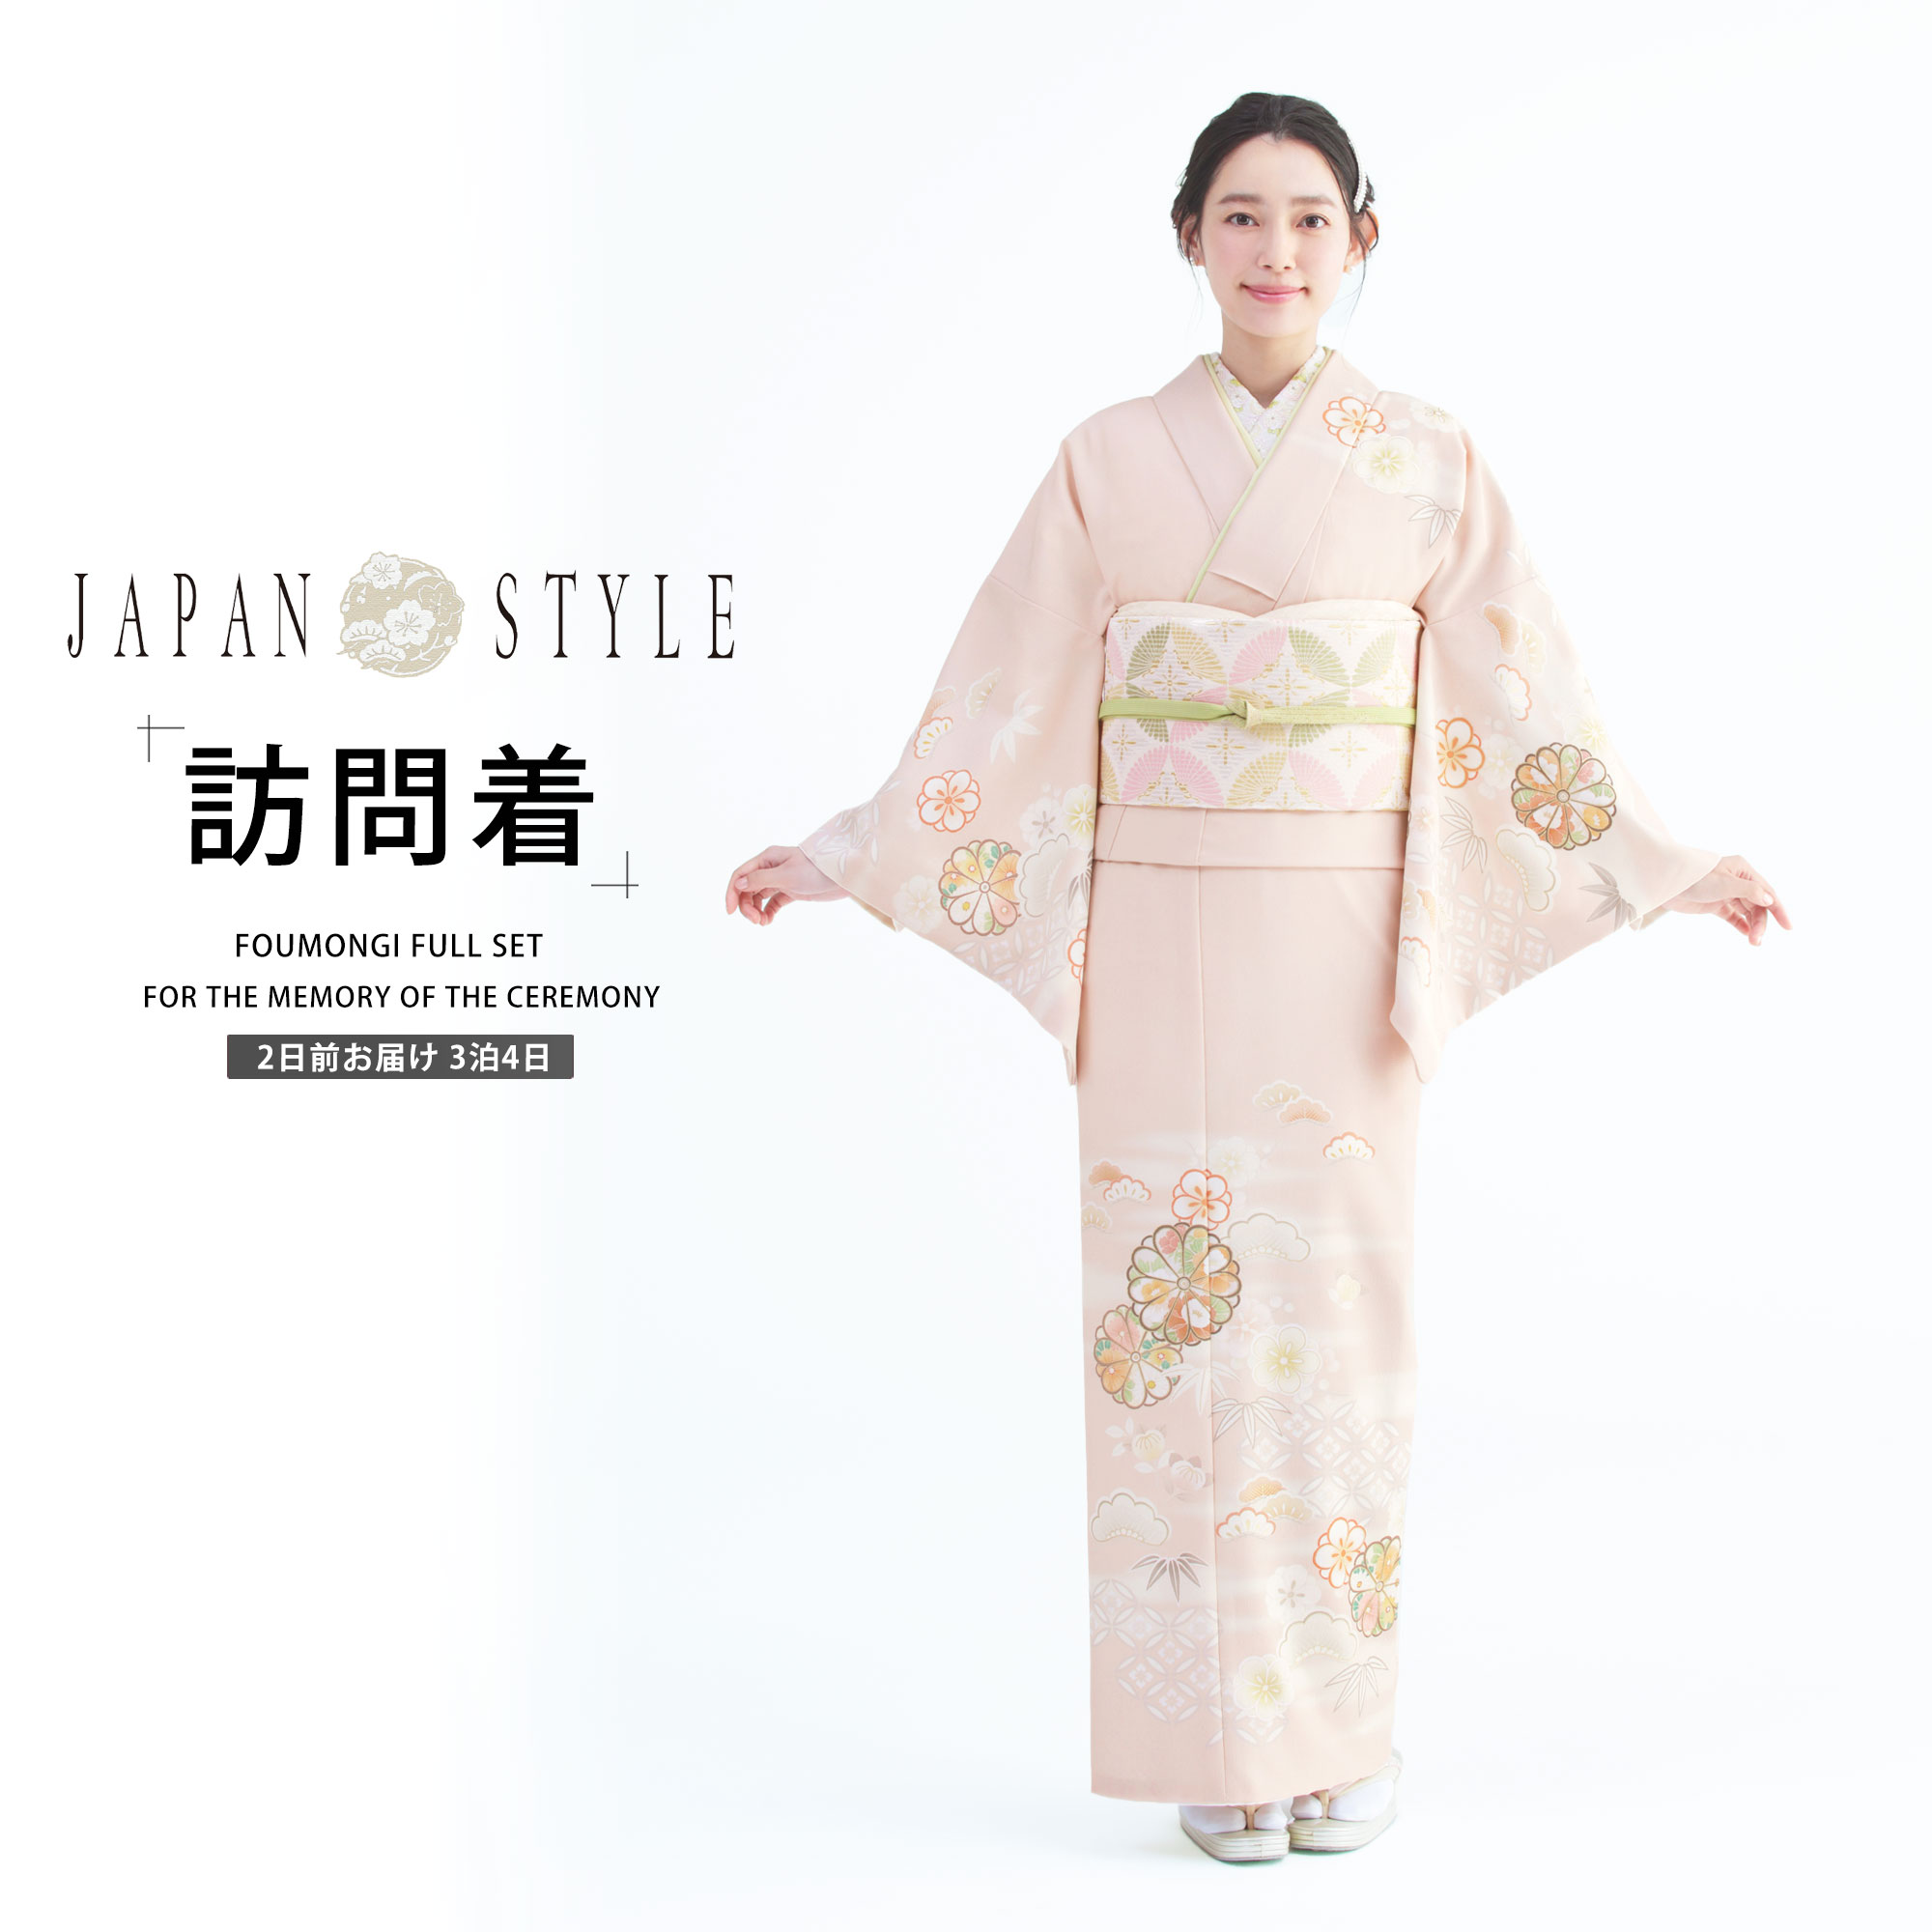 JAPAN STYLE 訪問着 レンタル 着物レンタル 貸衣装 フルセット